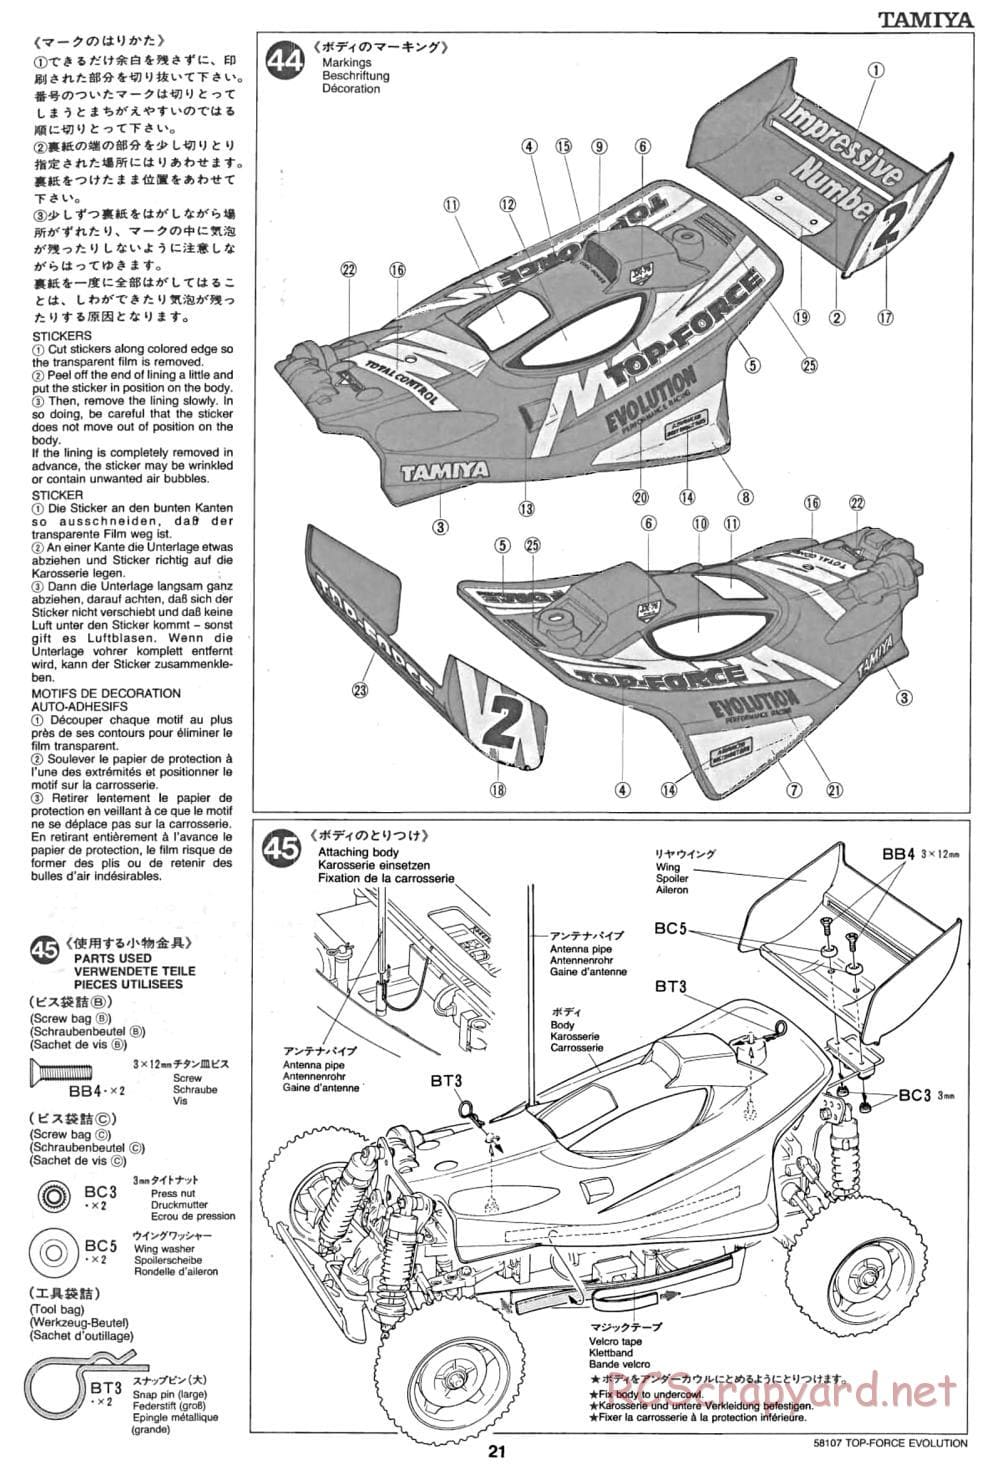 Tamiya - Top Force Evolution Chassis - Manual - Page 21